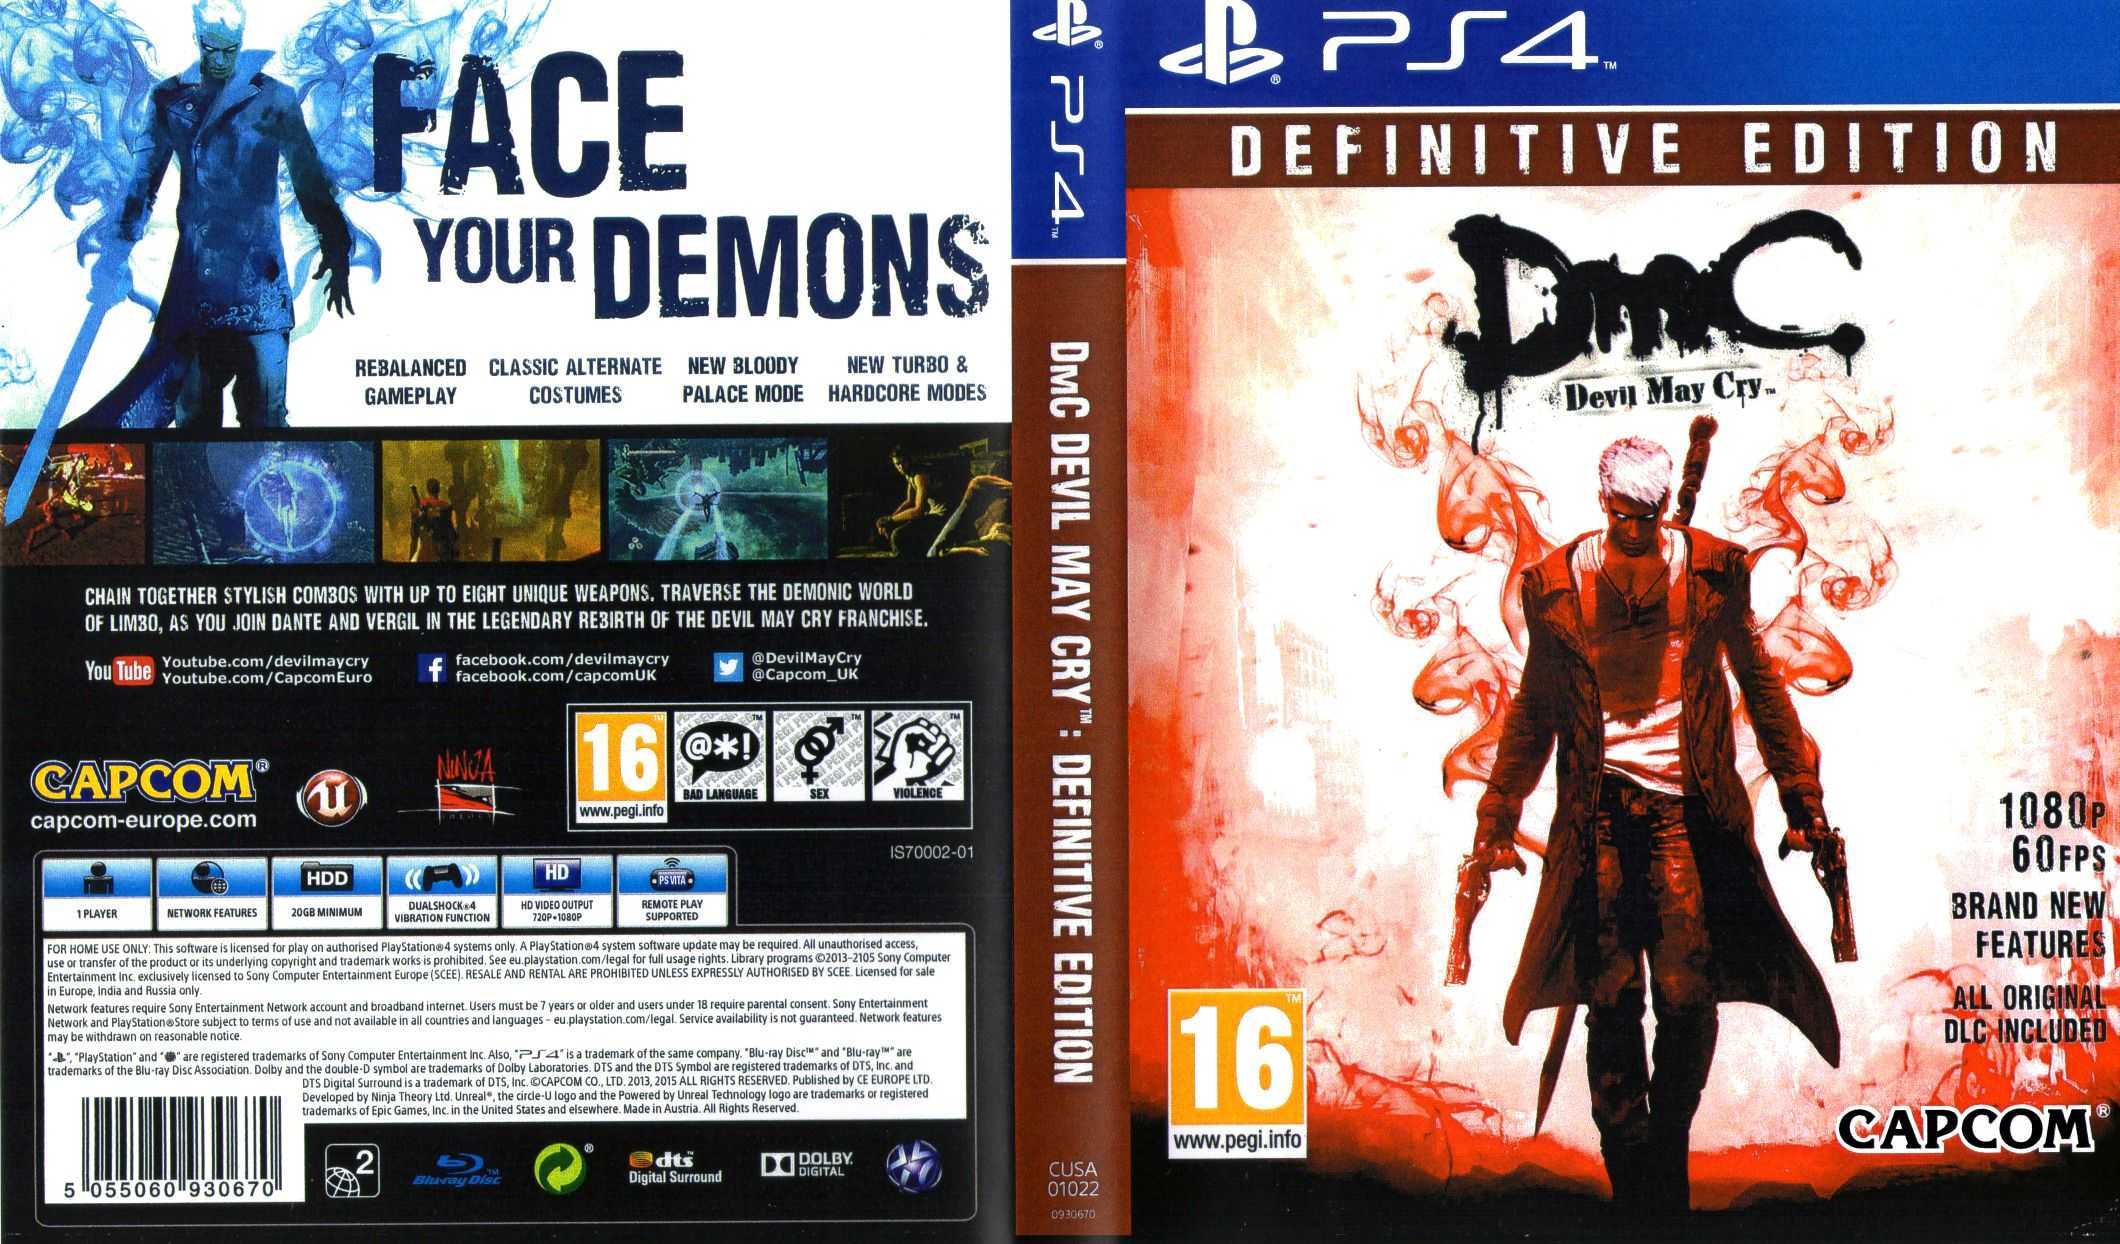 Dmc devil may definitive edition